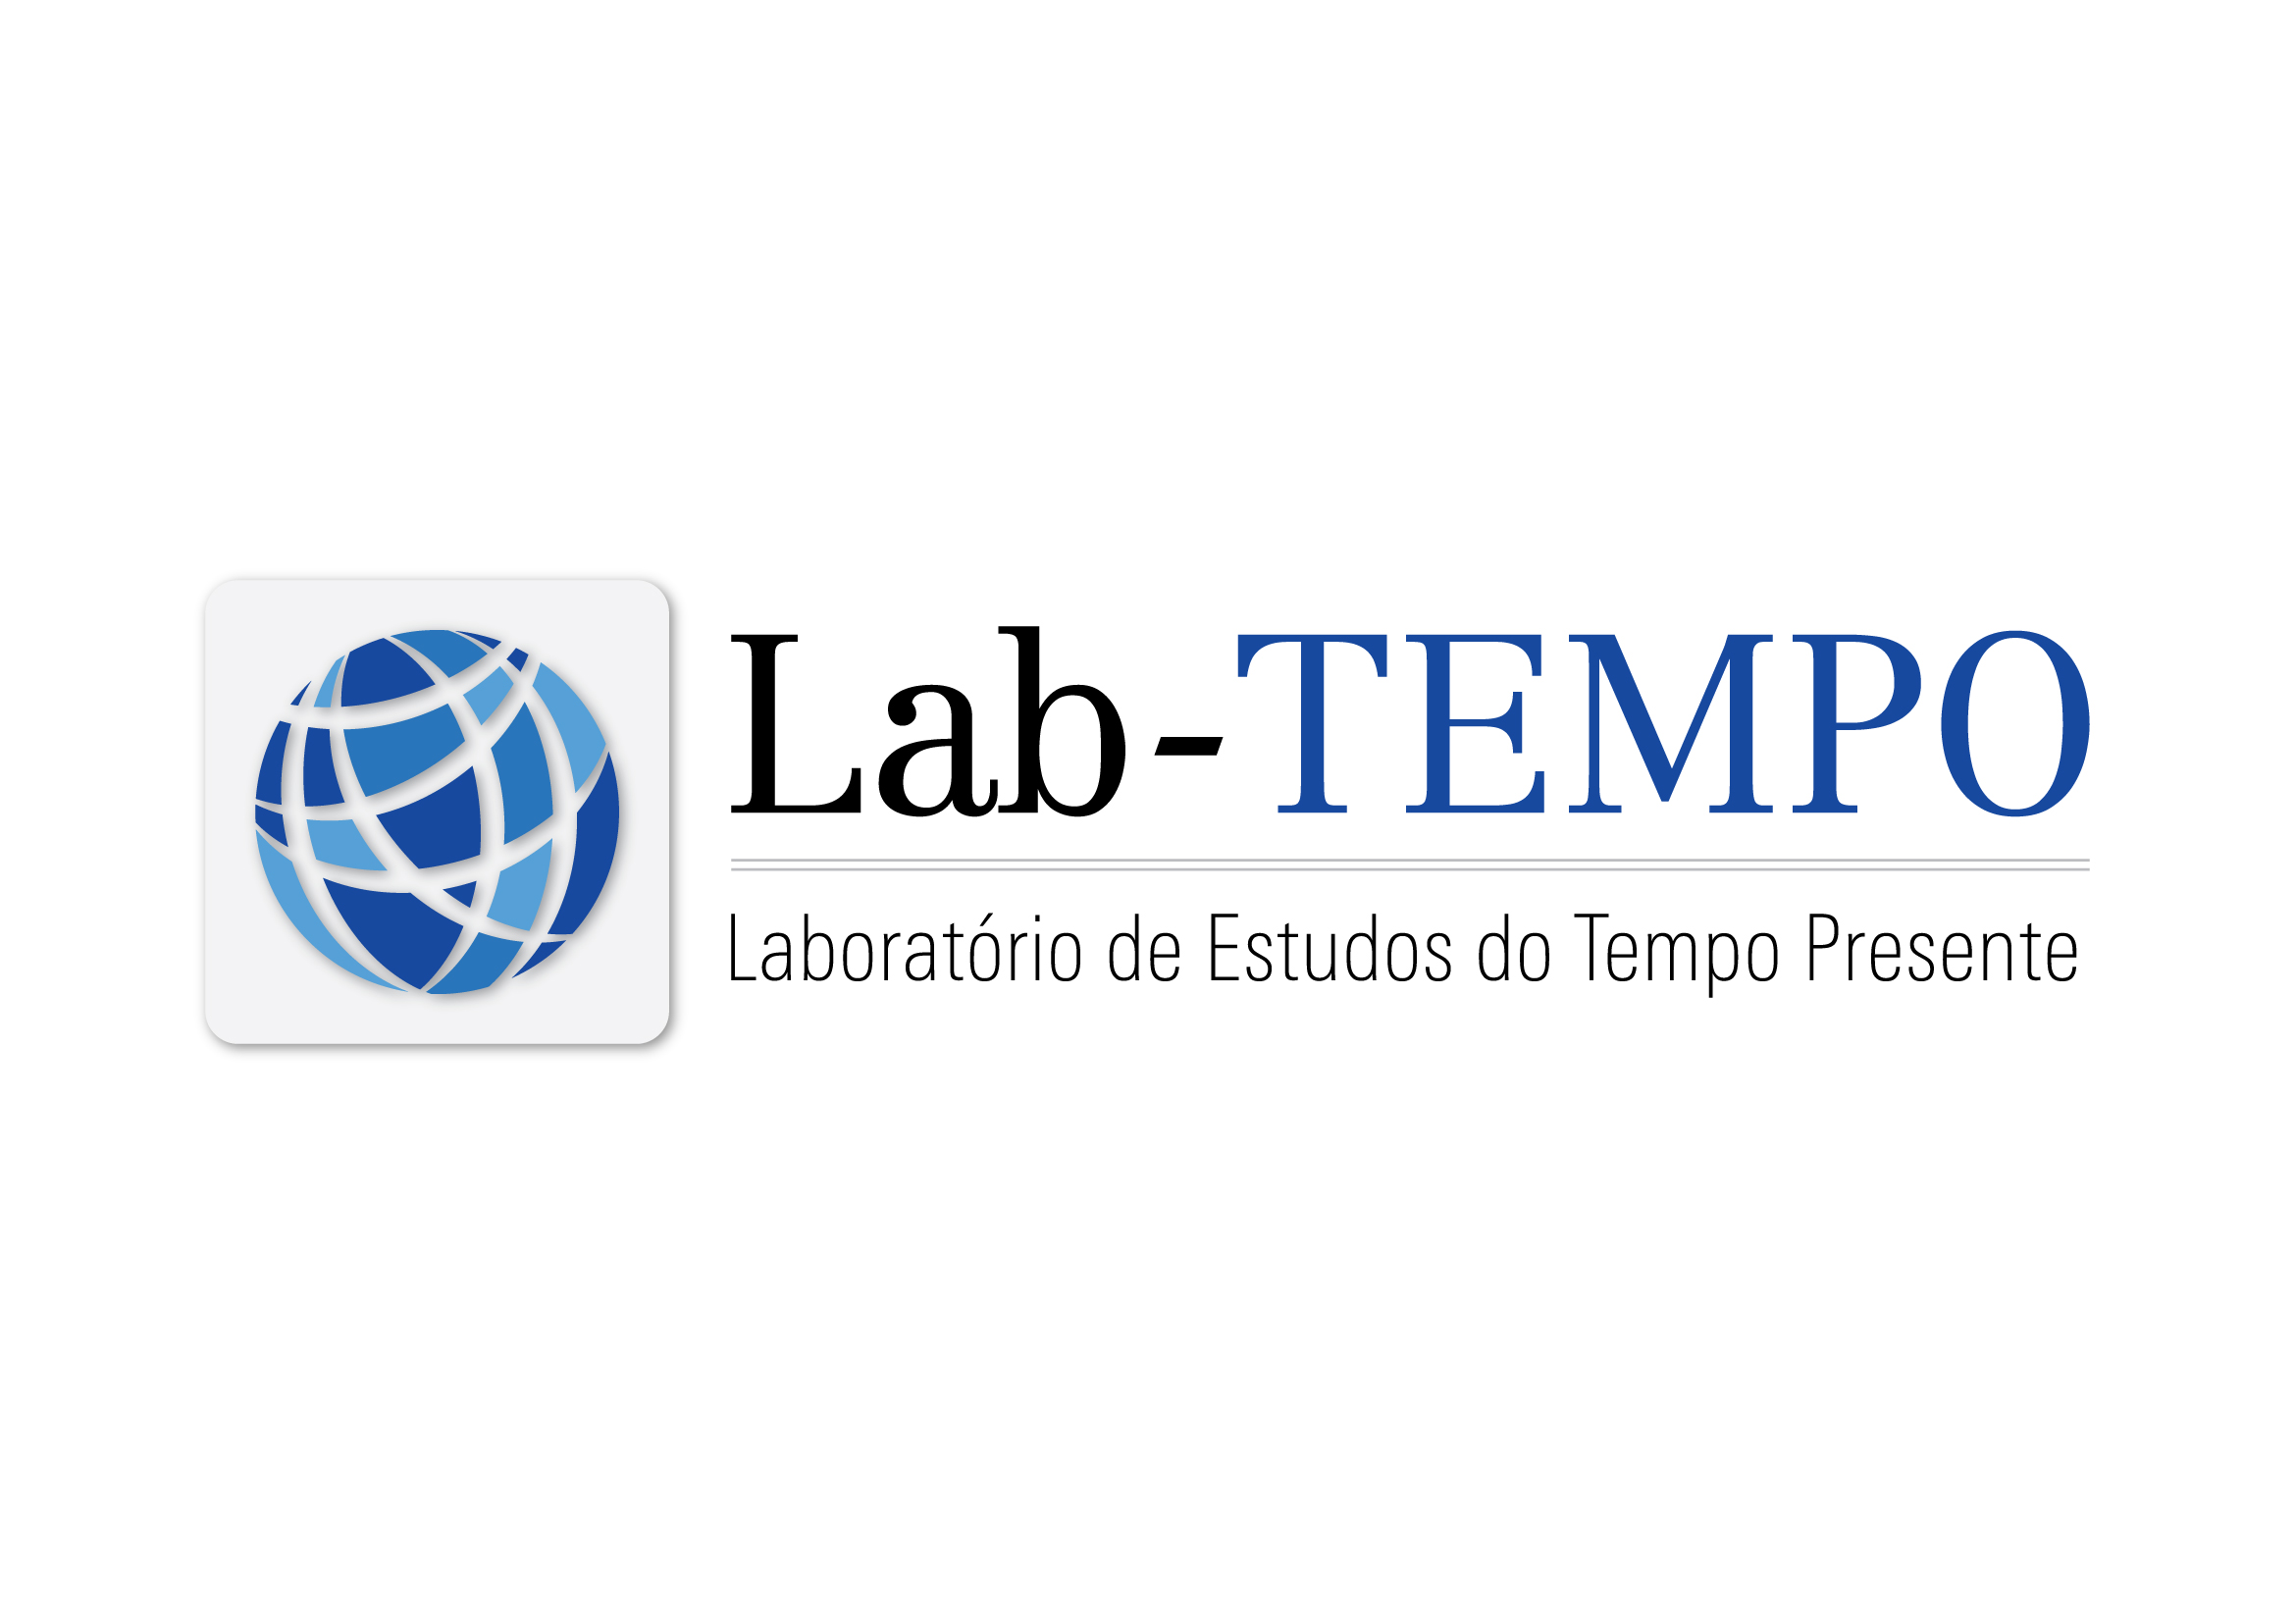 Logo-Lab-TEMPO